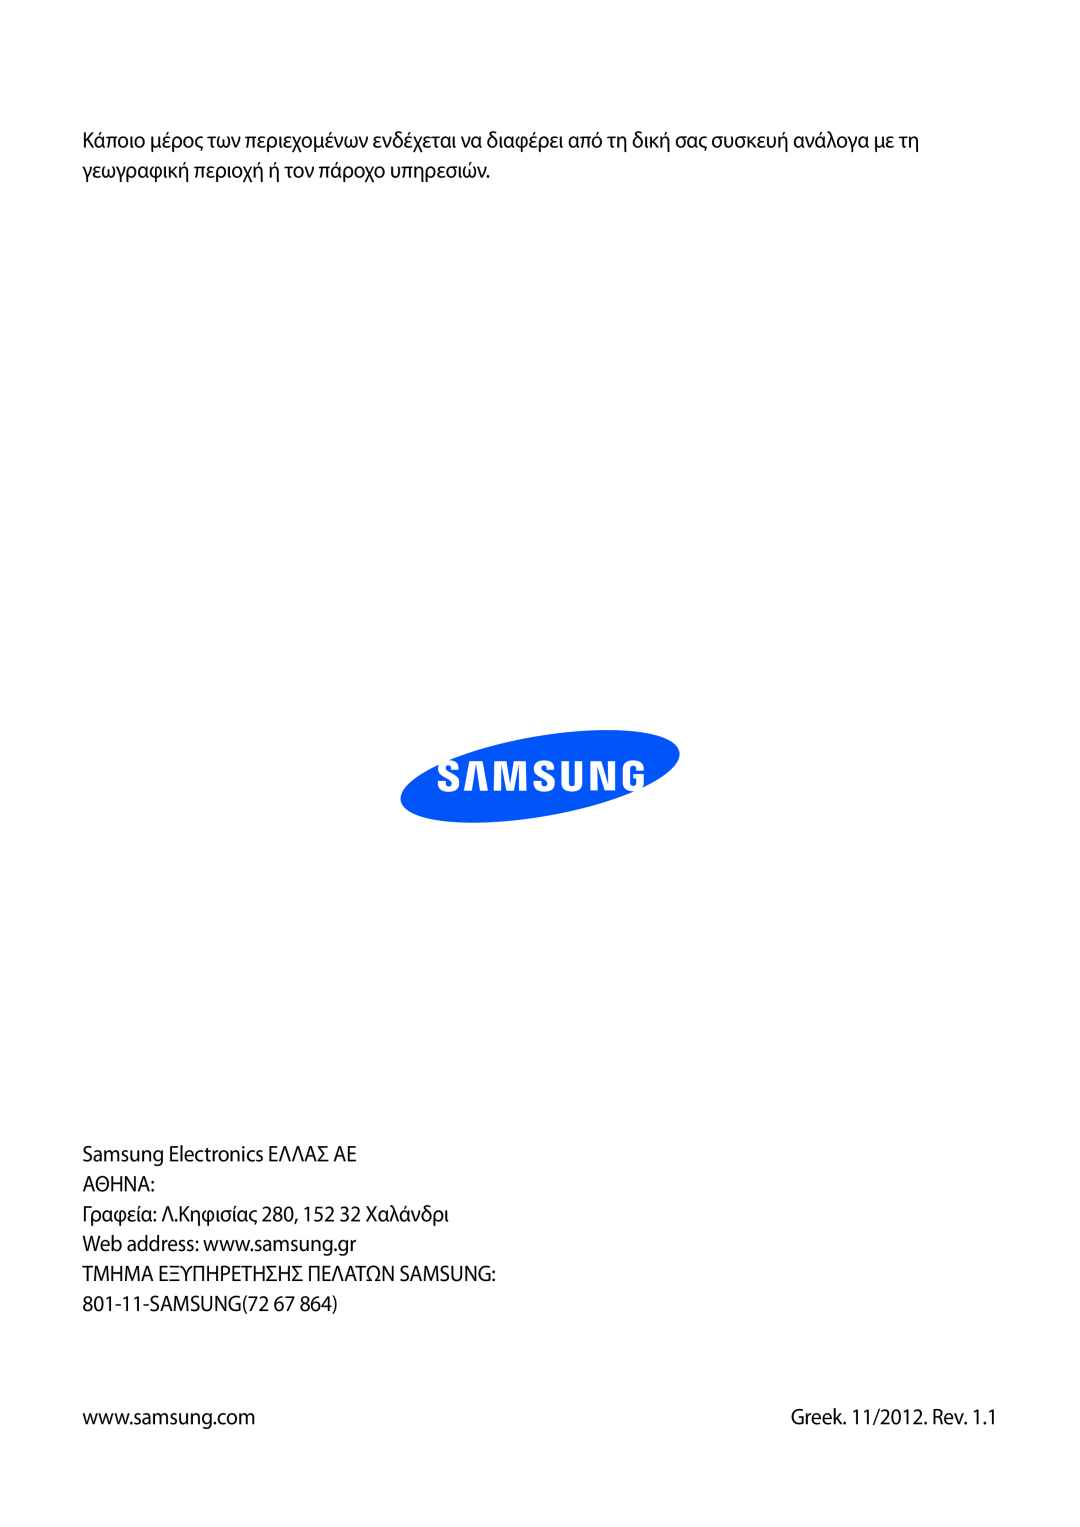 Samsung GT-N7100RWDEUR Samsung Electronics ΕΛΛΑΣ ΑΕ ΑΘΗΝΑ, Γραφεία Λ.Κηφισίας 280, 152 32 Χαλάνδρι, Greek. 11/2012. Rev 